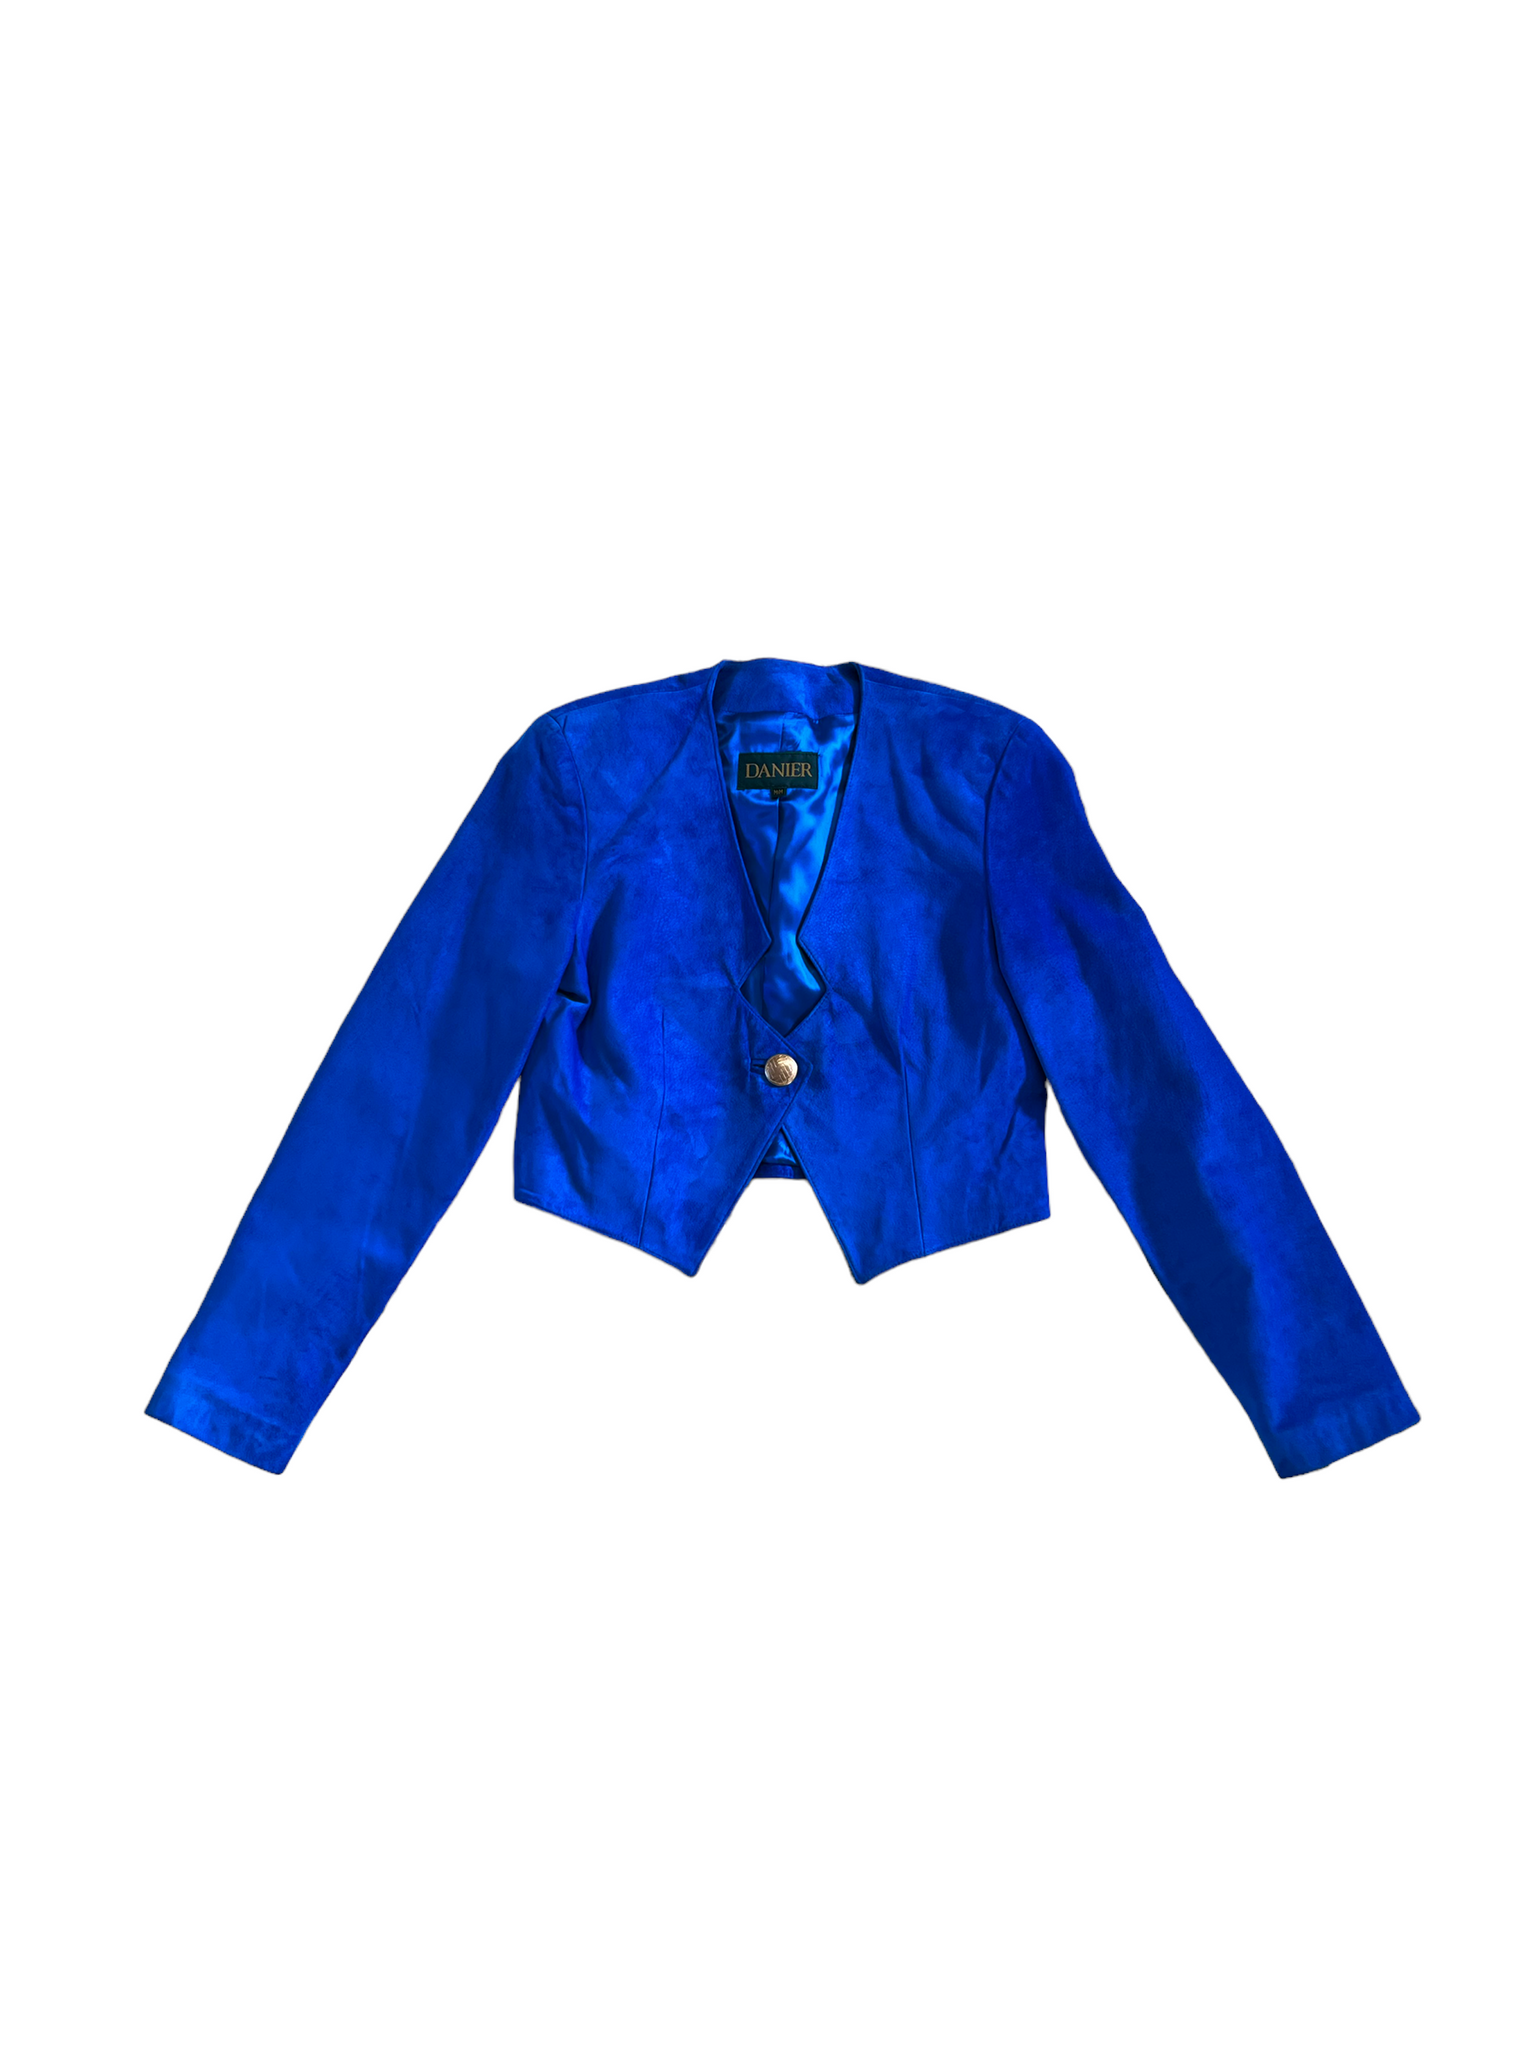 Vintage Danier Blue Suede Jacket